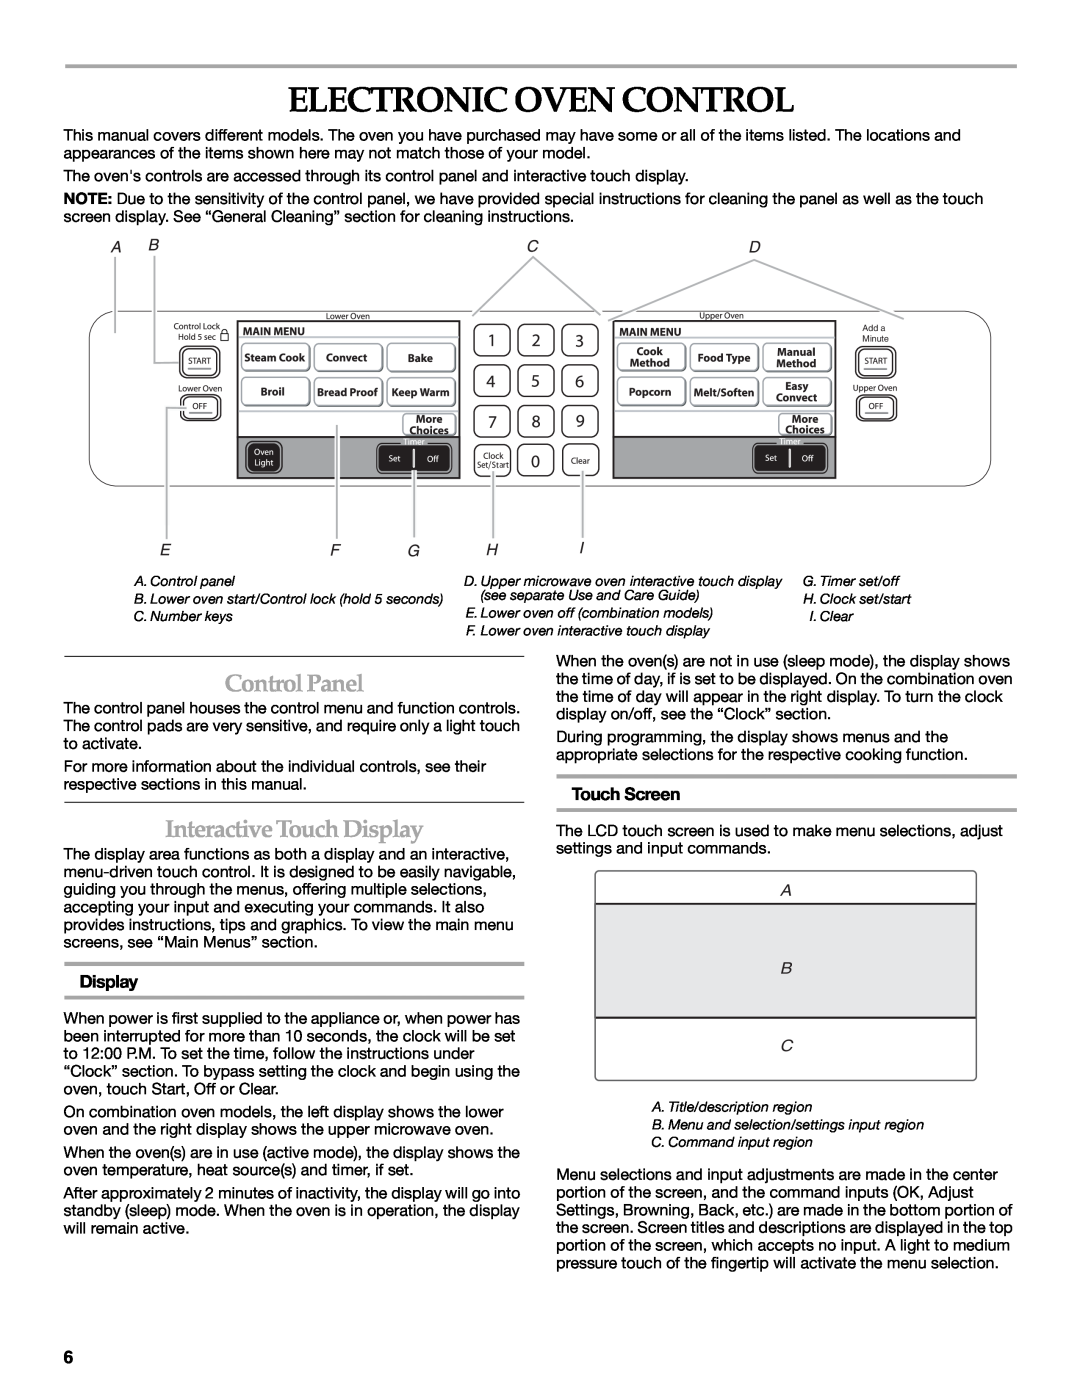 KitchenAid KEHU309 manual Electronic Oven Control, ControlPanel, InteractiveTouchDisplay, Touch Screen, A B C 